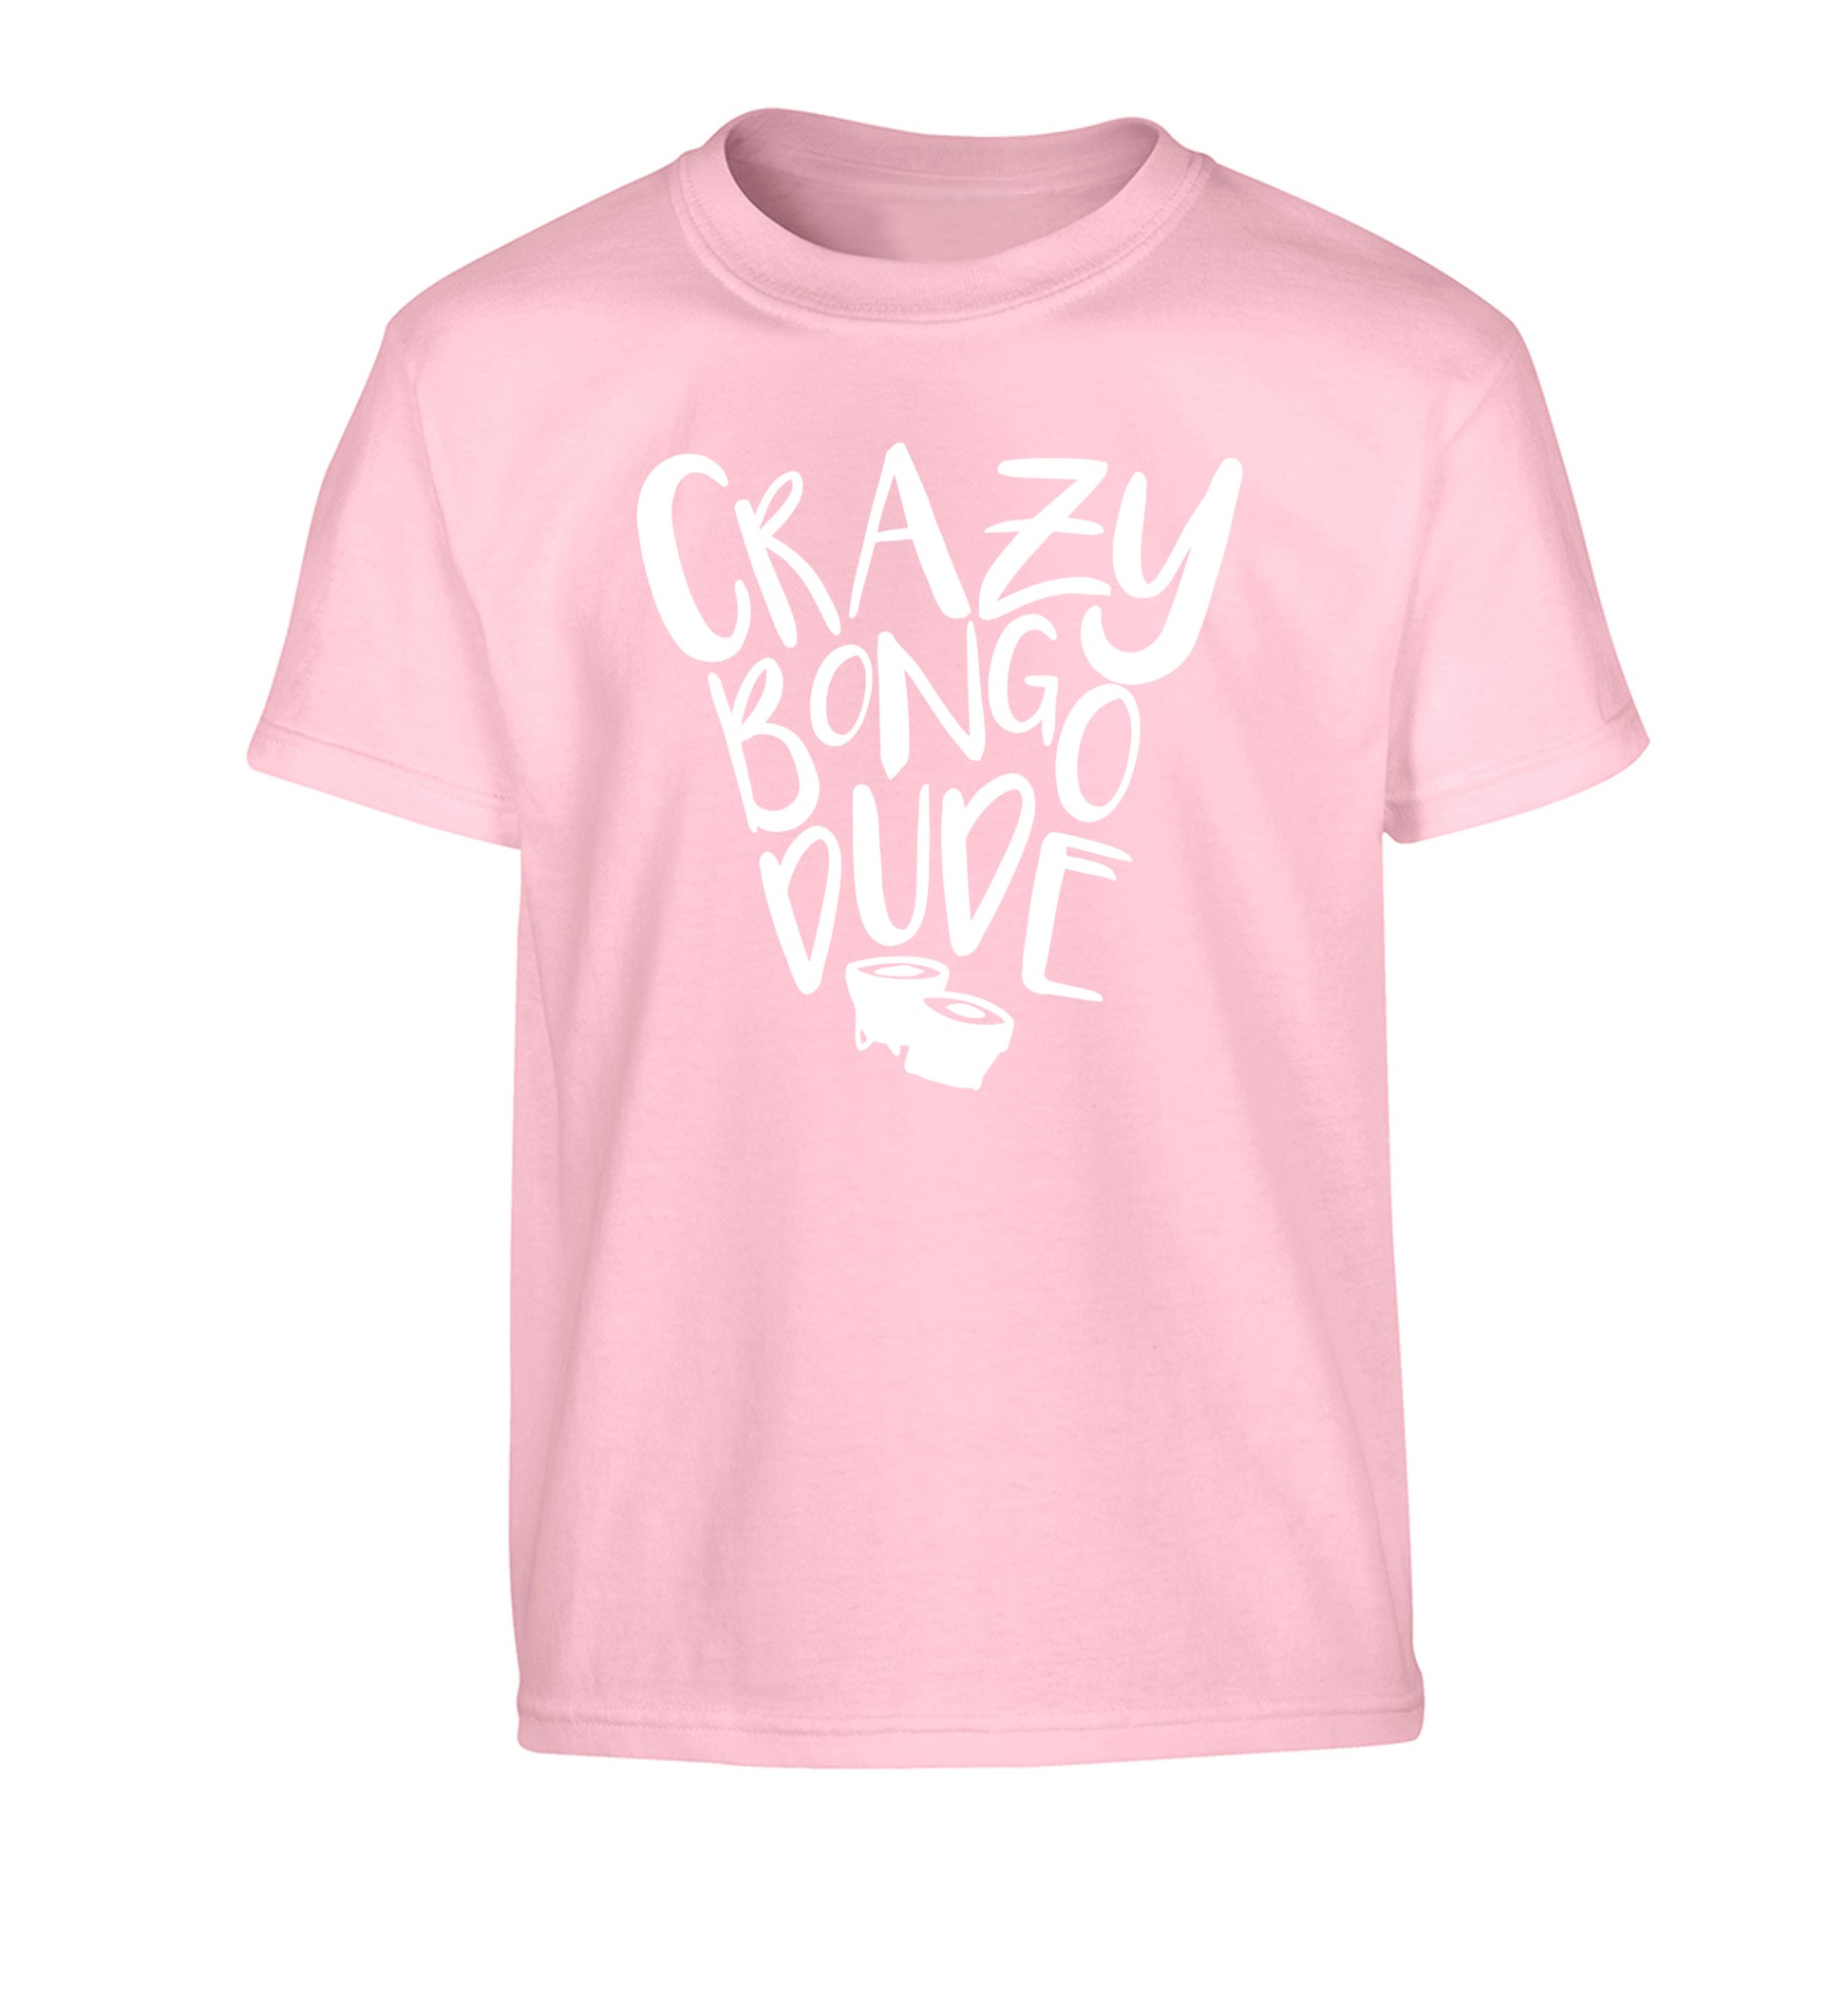 Crazy bongo dude Children's light pink Tshirt 12-14 Years